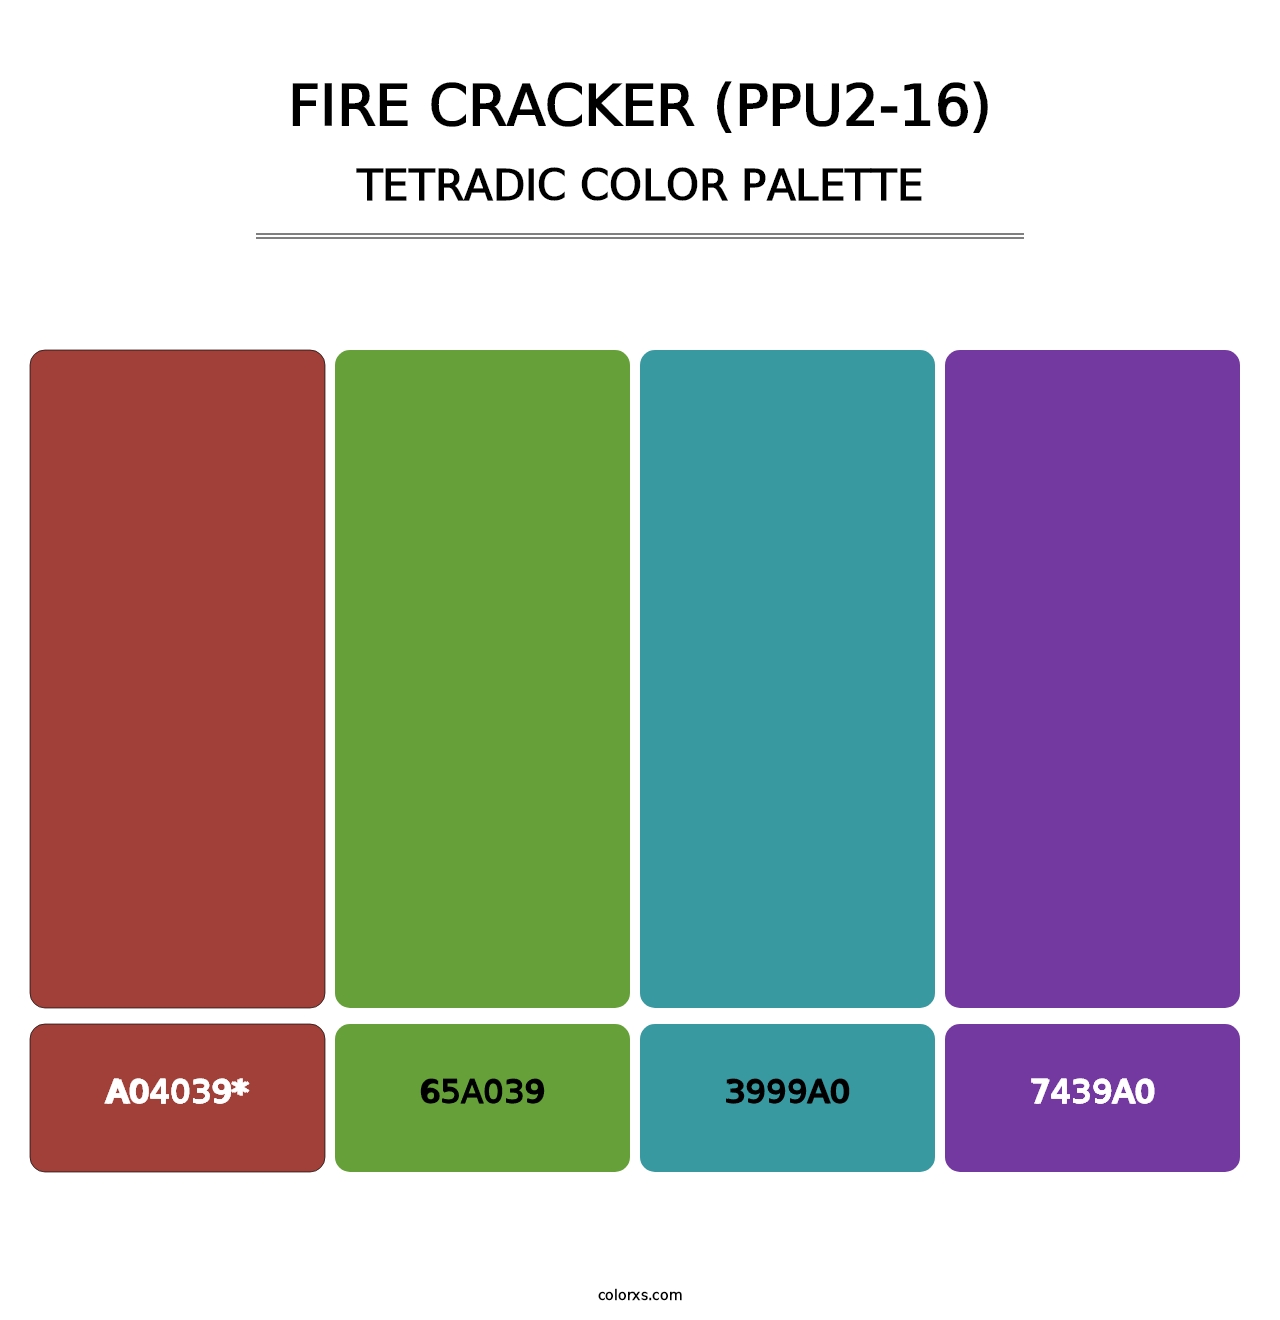 Fire Cracker (PPU2-16) - Tetradic Color Palette